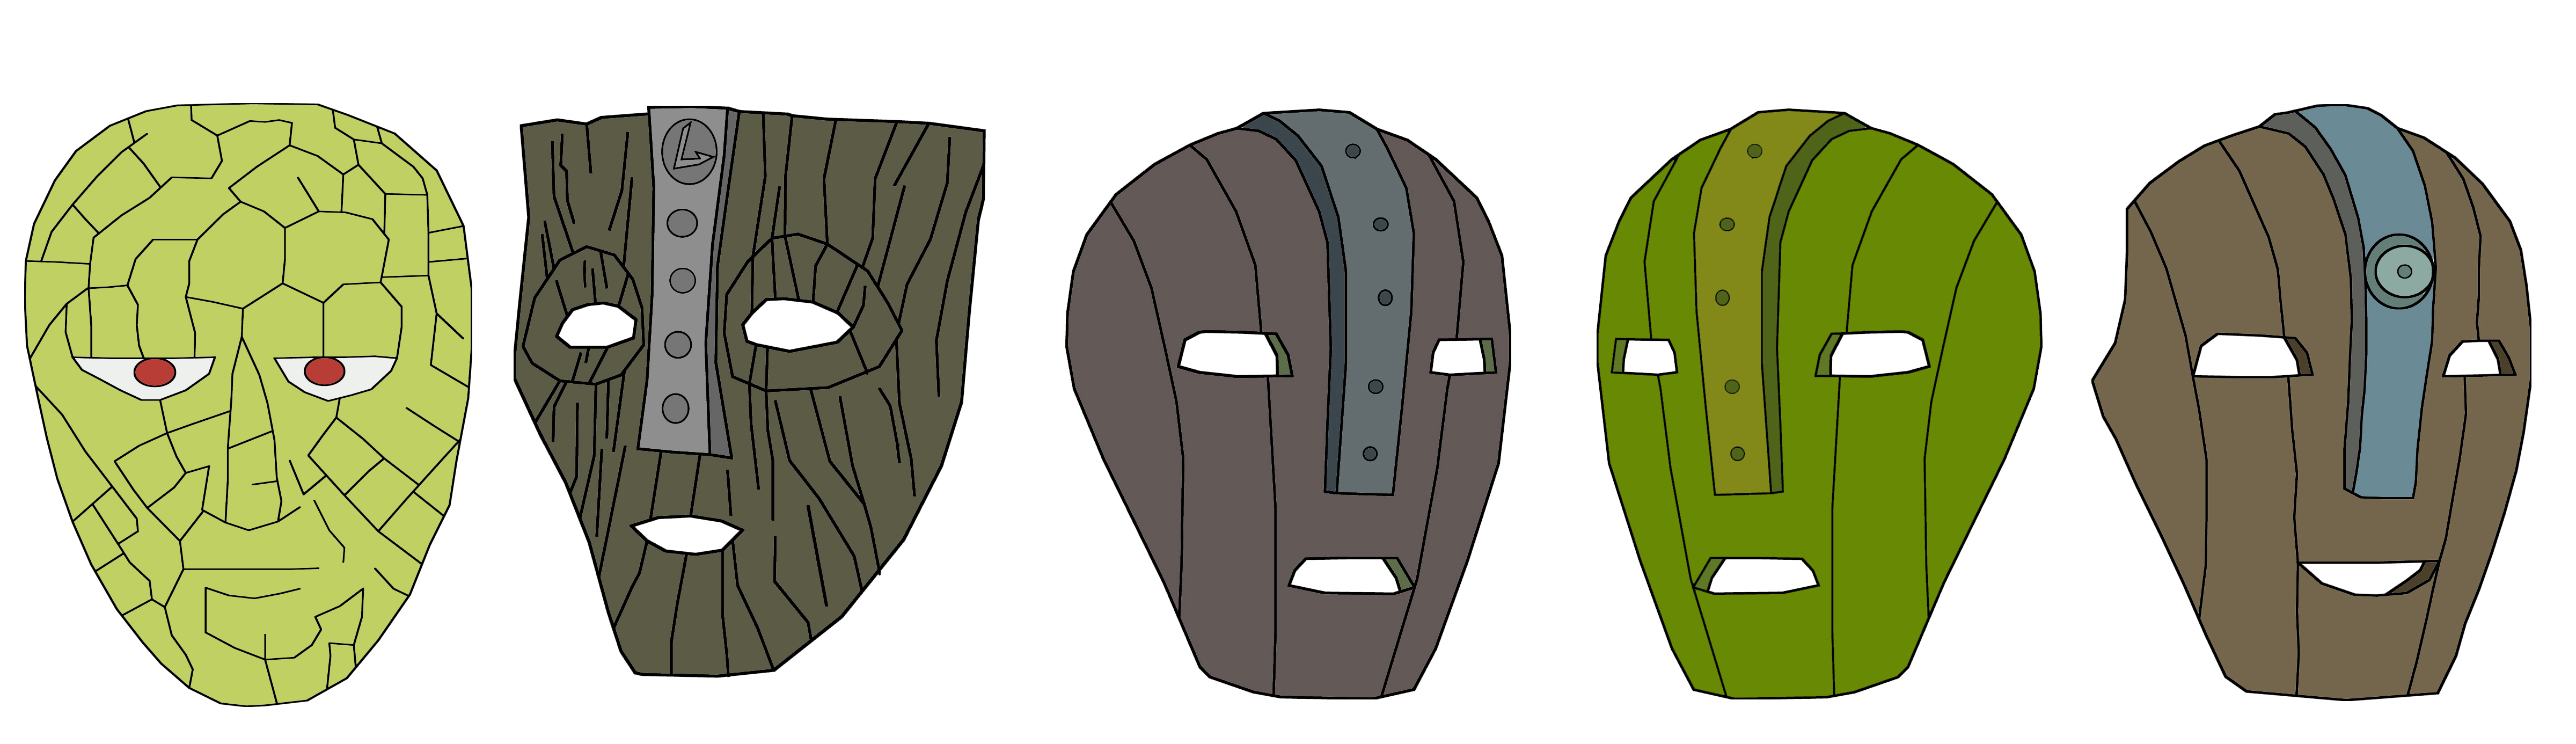 Terapi serviet excitation The Mask (object) | The Mask Wiki | Fandom